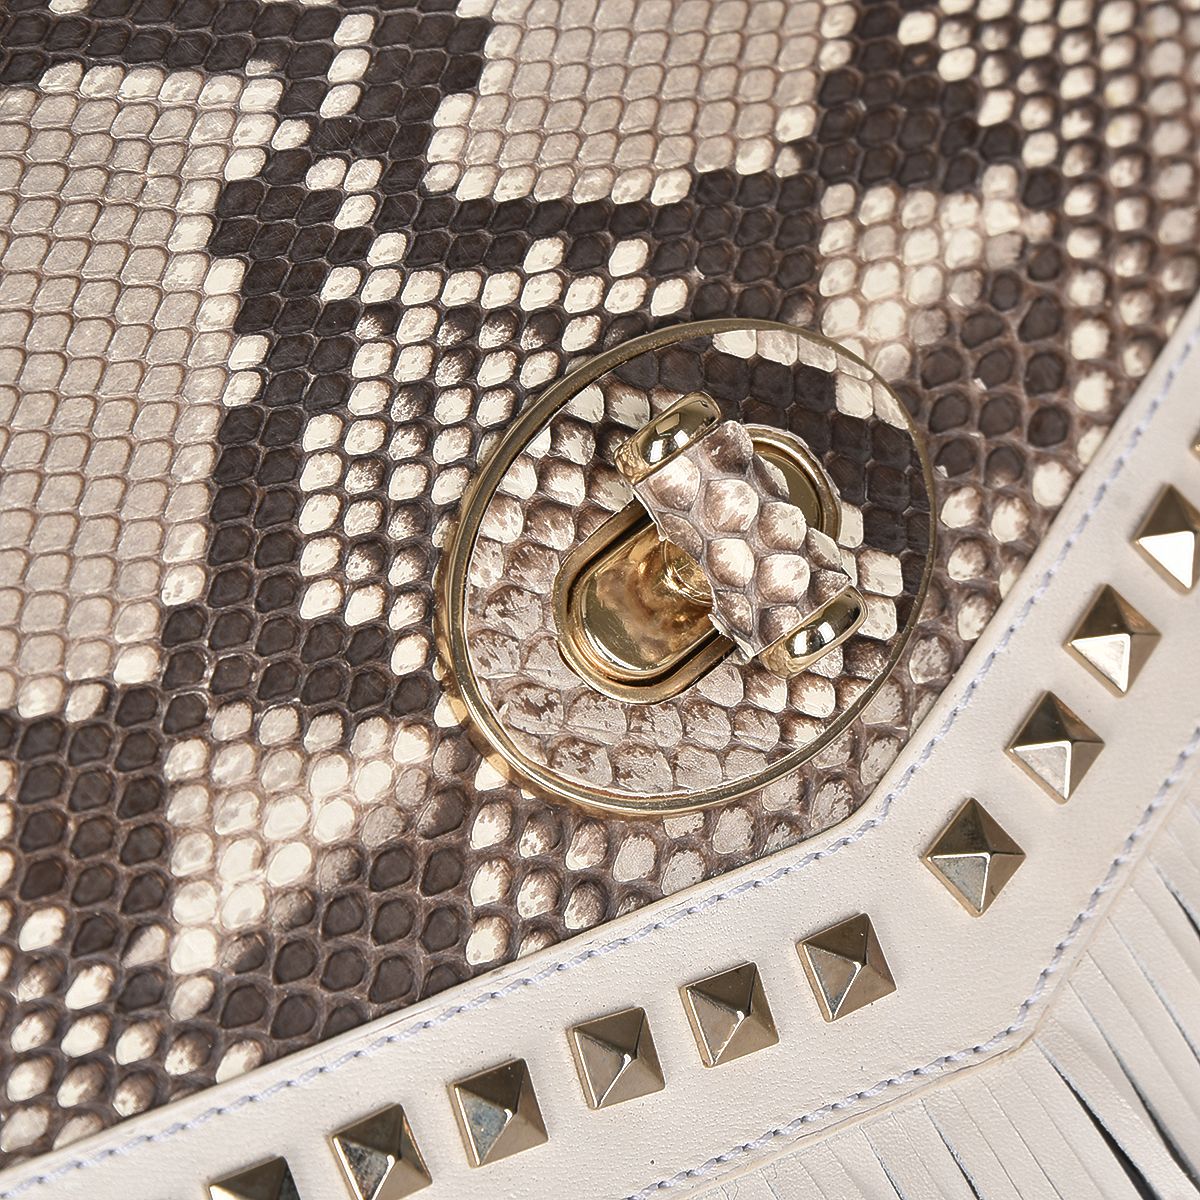 Handmade white exotic leather casual handbag